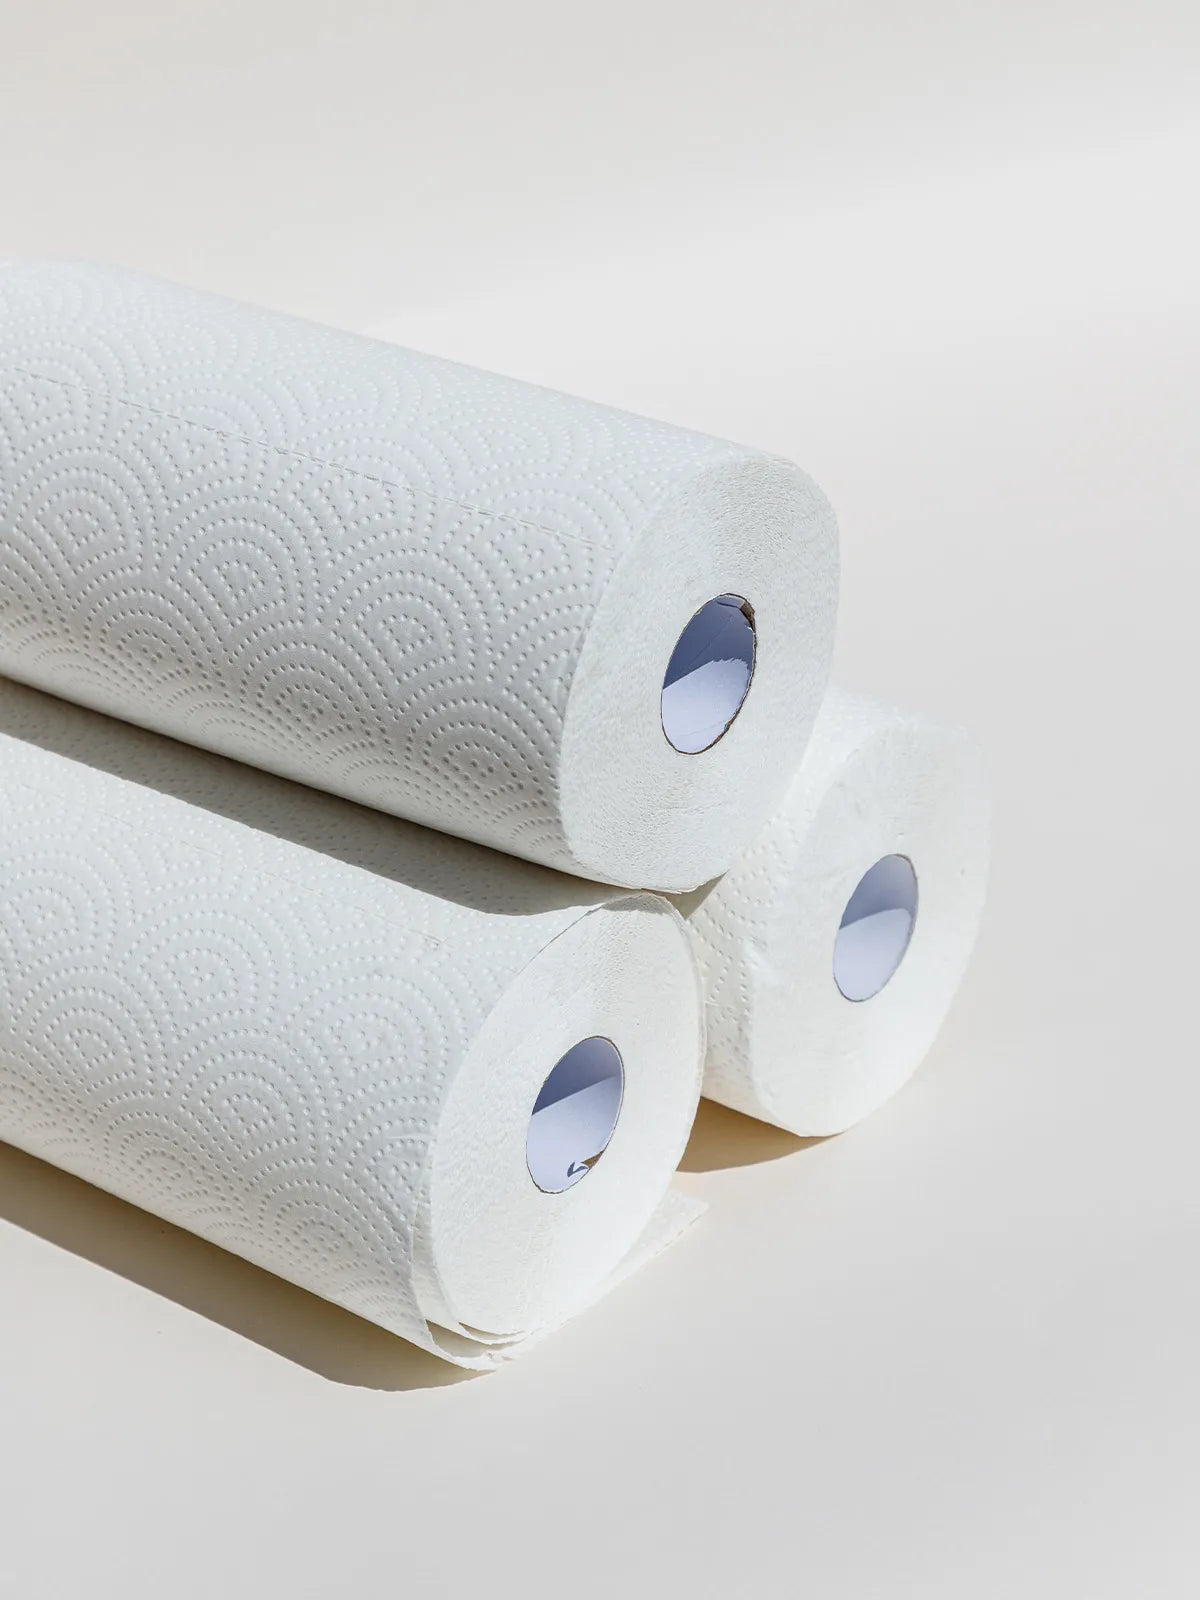 Seek Bamboo Paper Towels